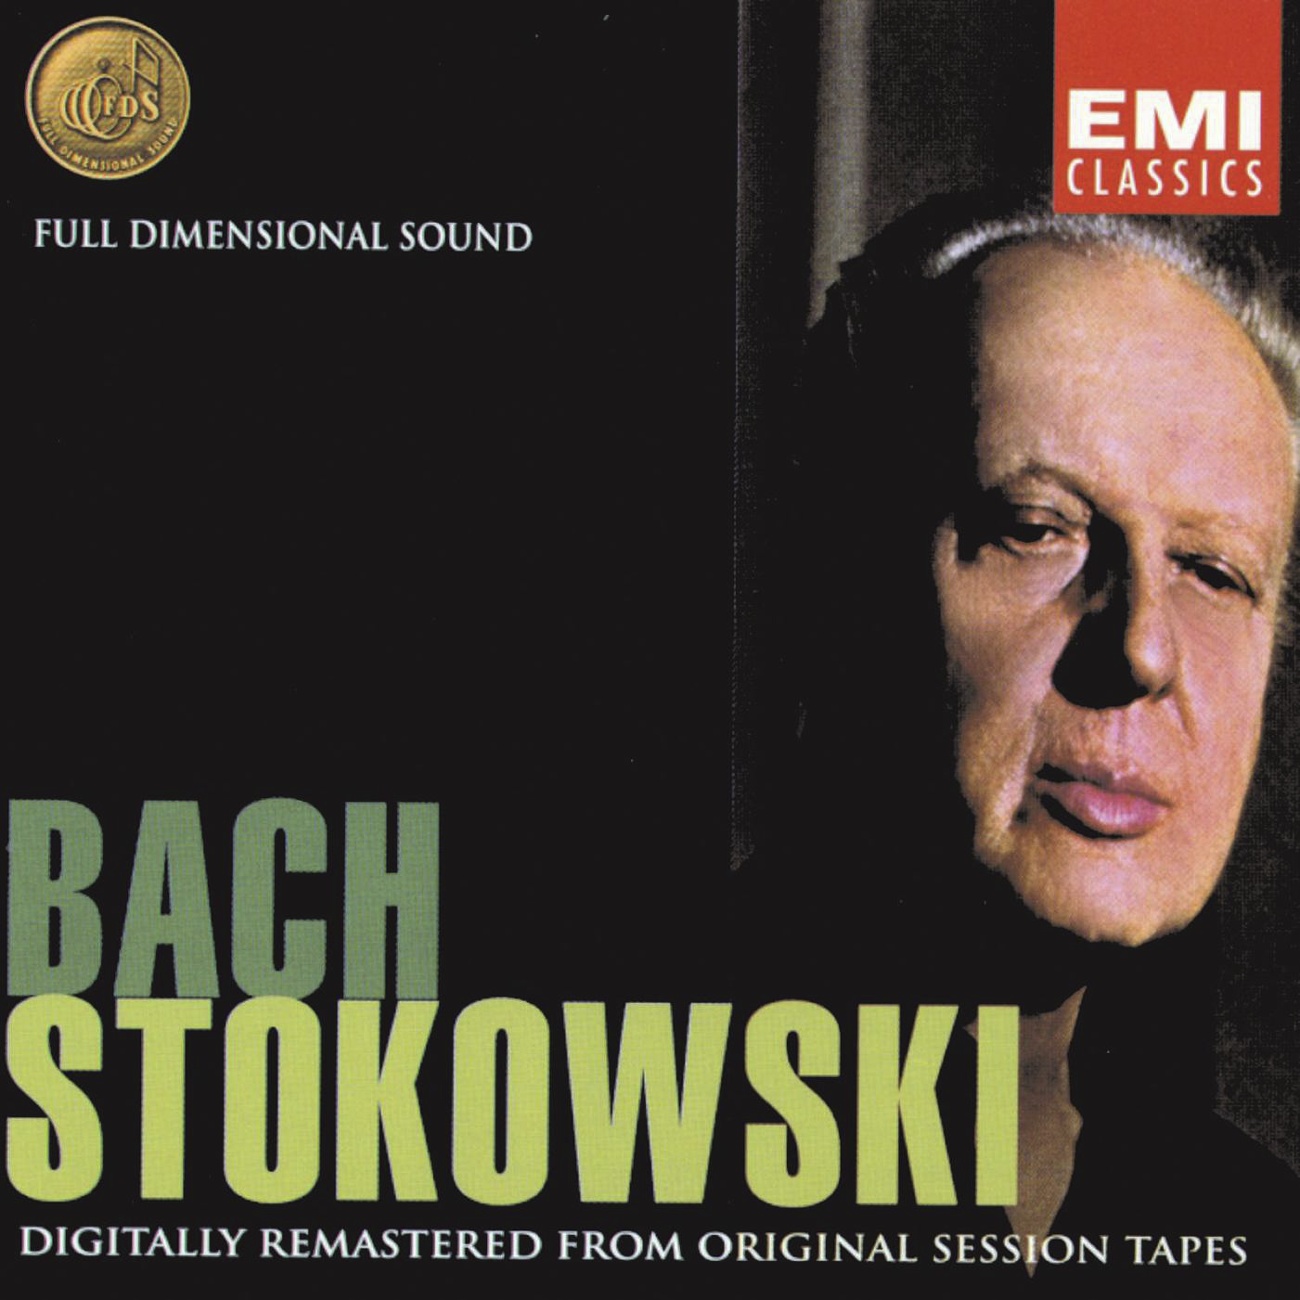 Passacaglia and Fugue in C minor BWV582 (1997 Digital Remaster): Passacaglia